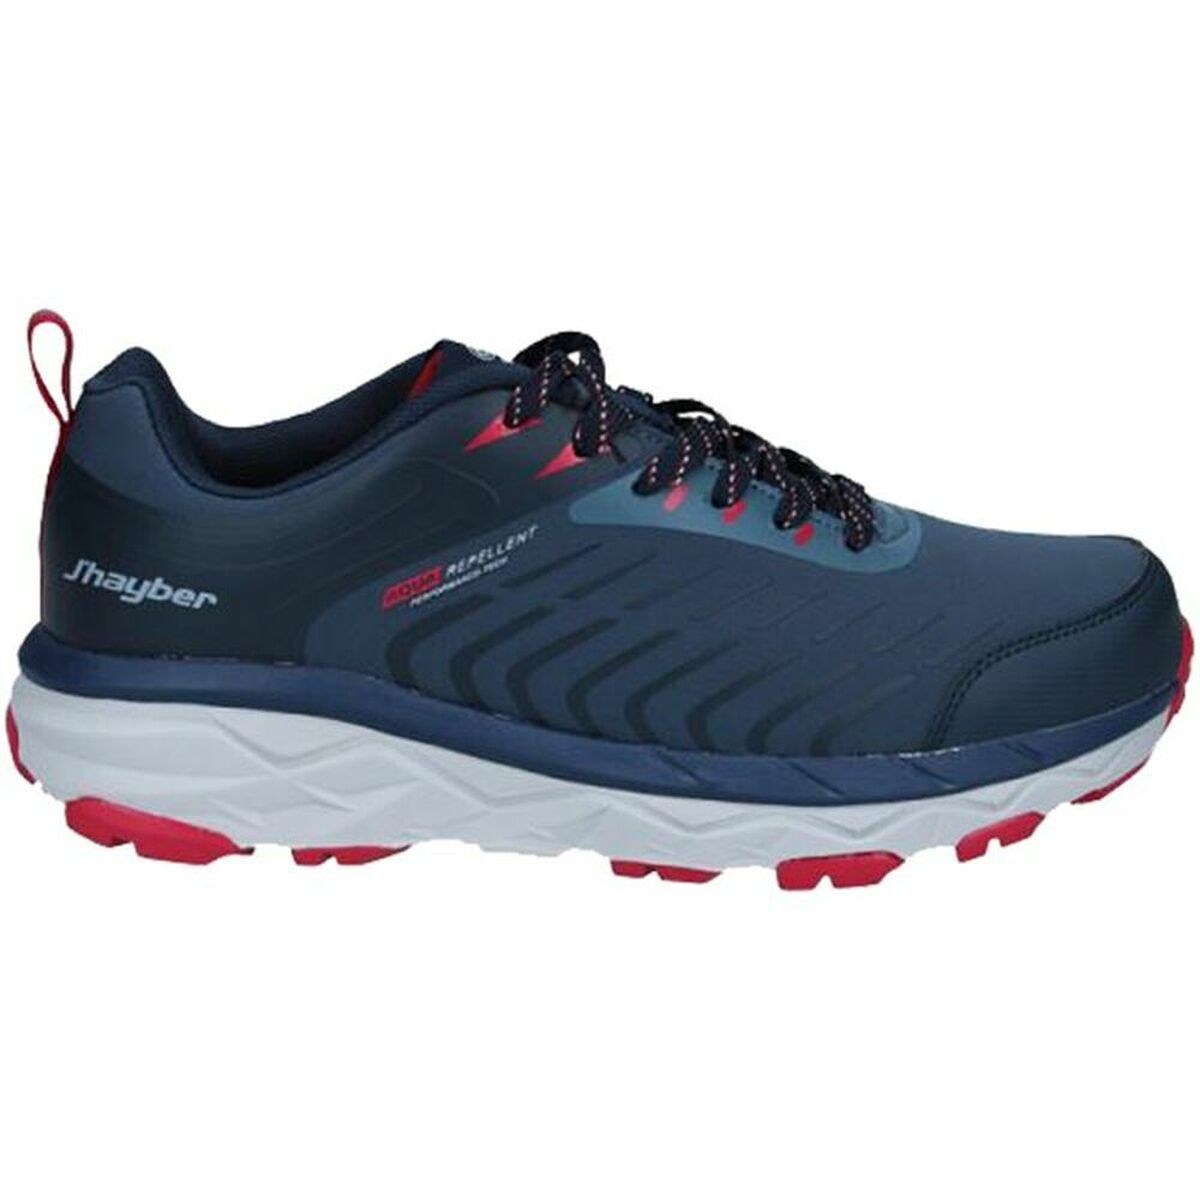 Chaussures de Running pour Adultes J-Hayber Montagne Blue marine